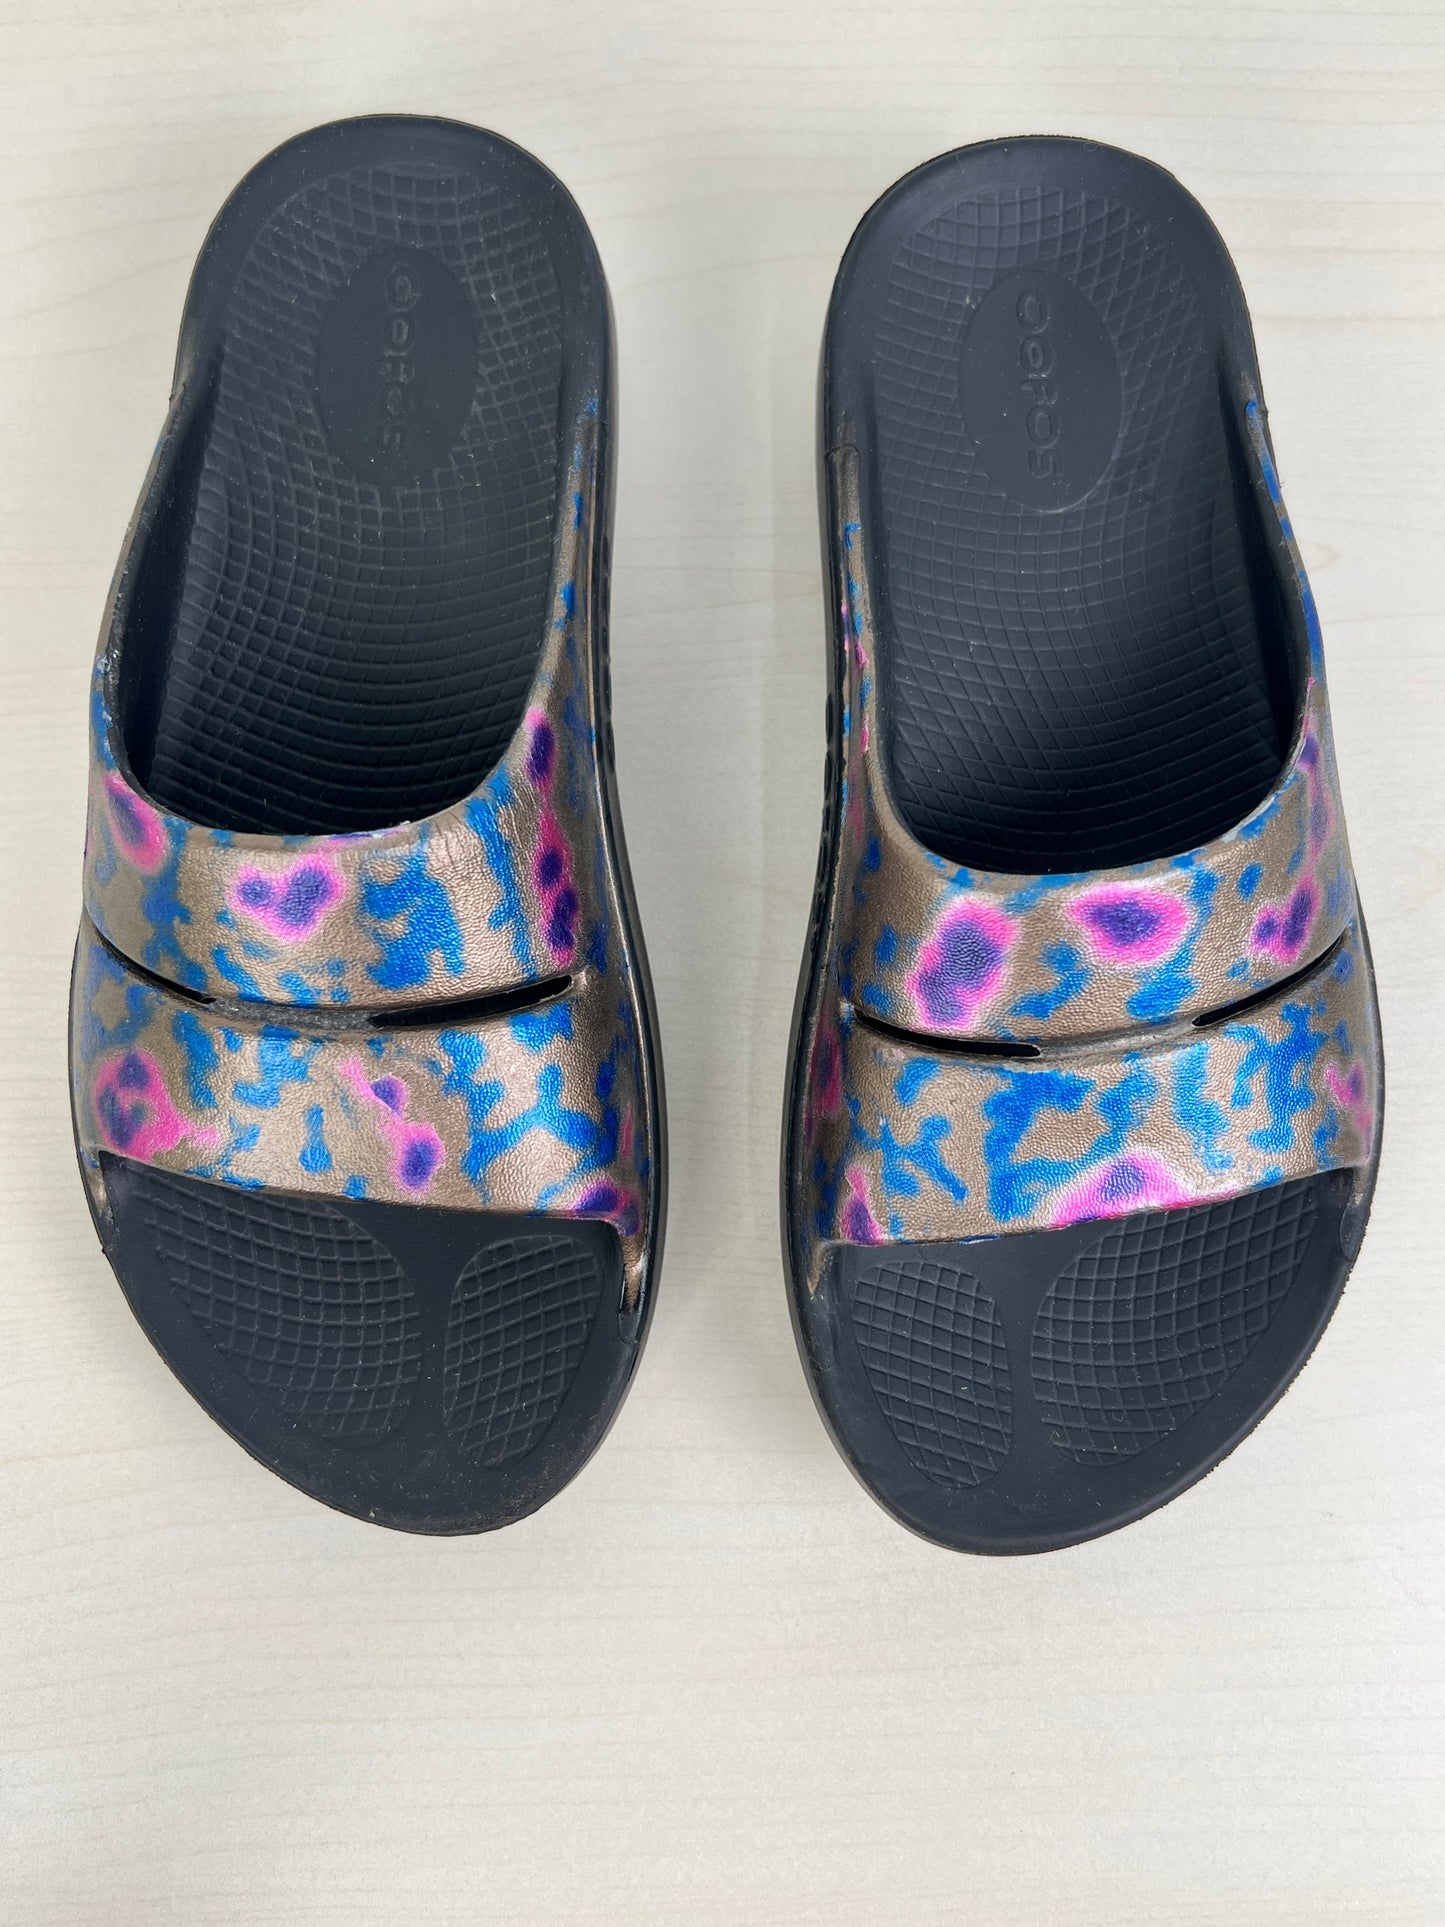 Black Sandals Sport Oofos, Size 7